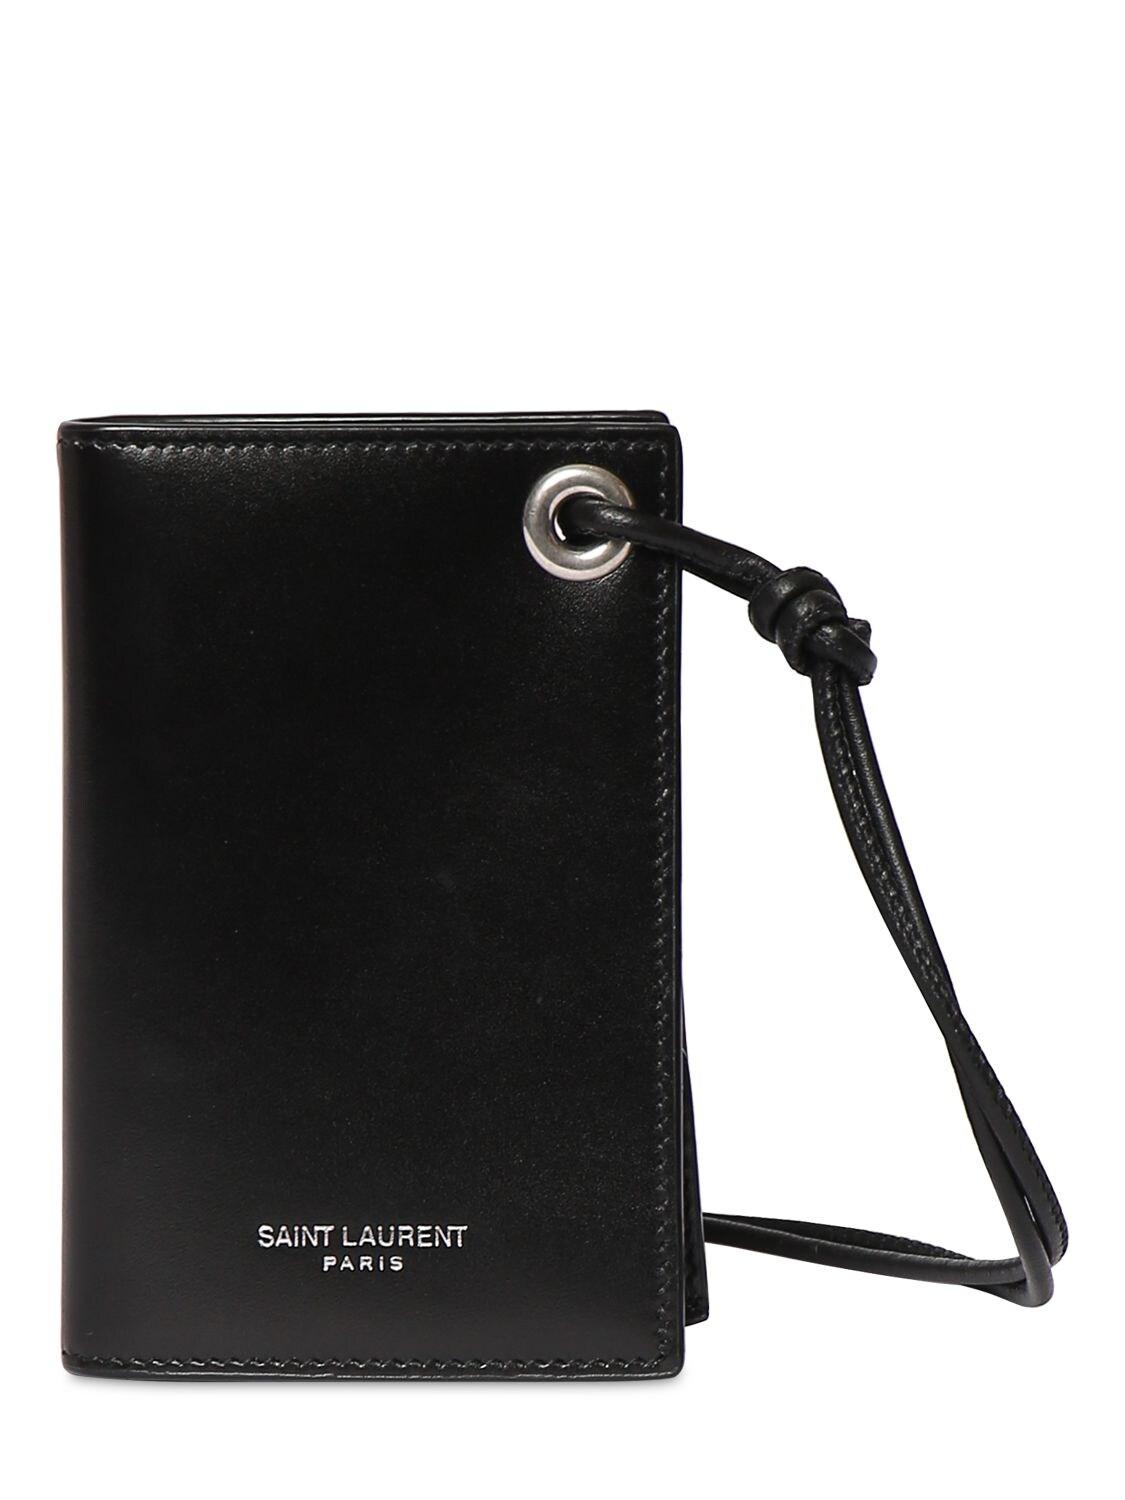 Ysl leather card holder - Saint Laurent - Men